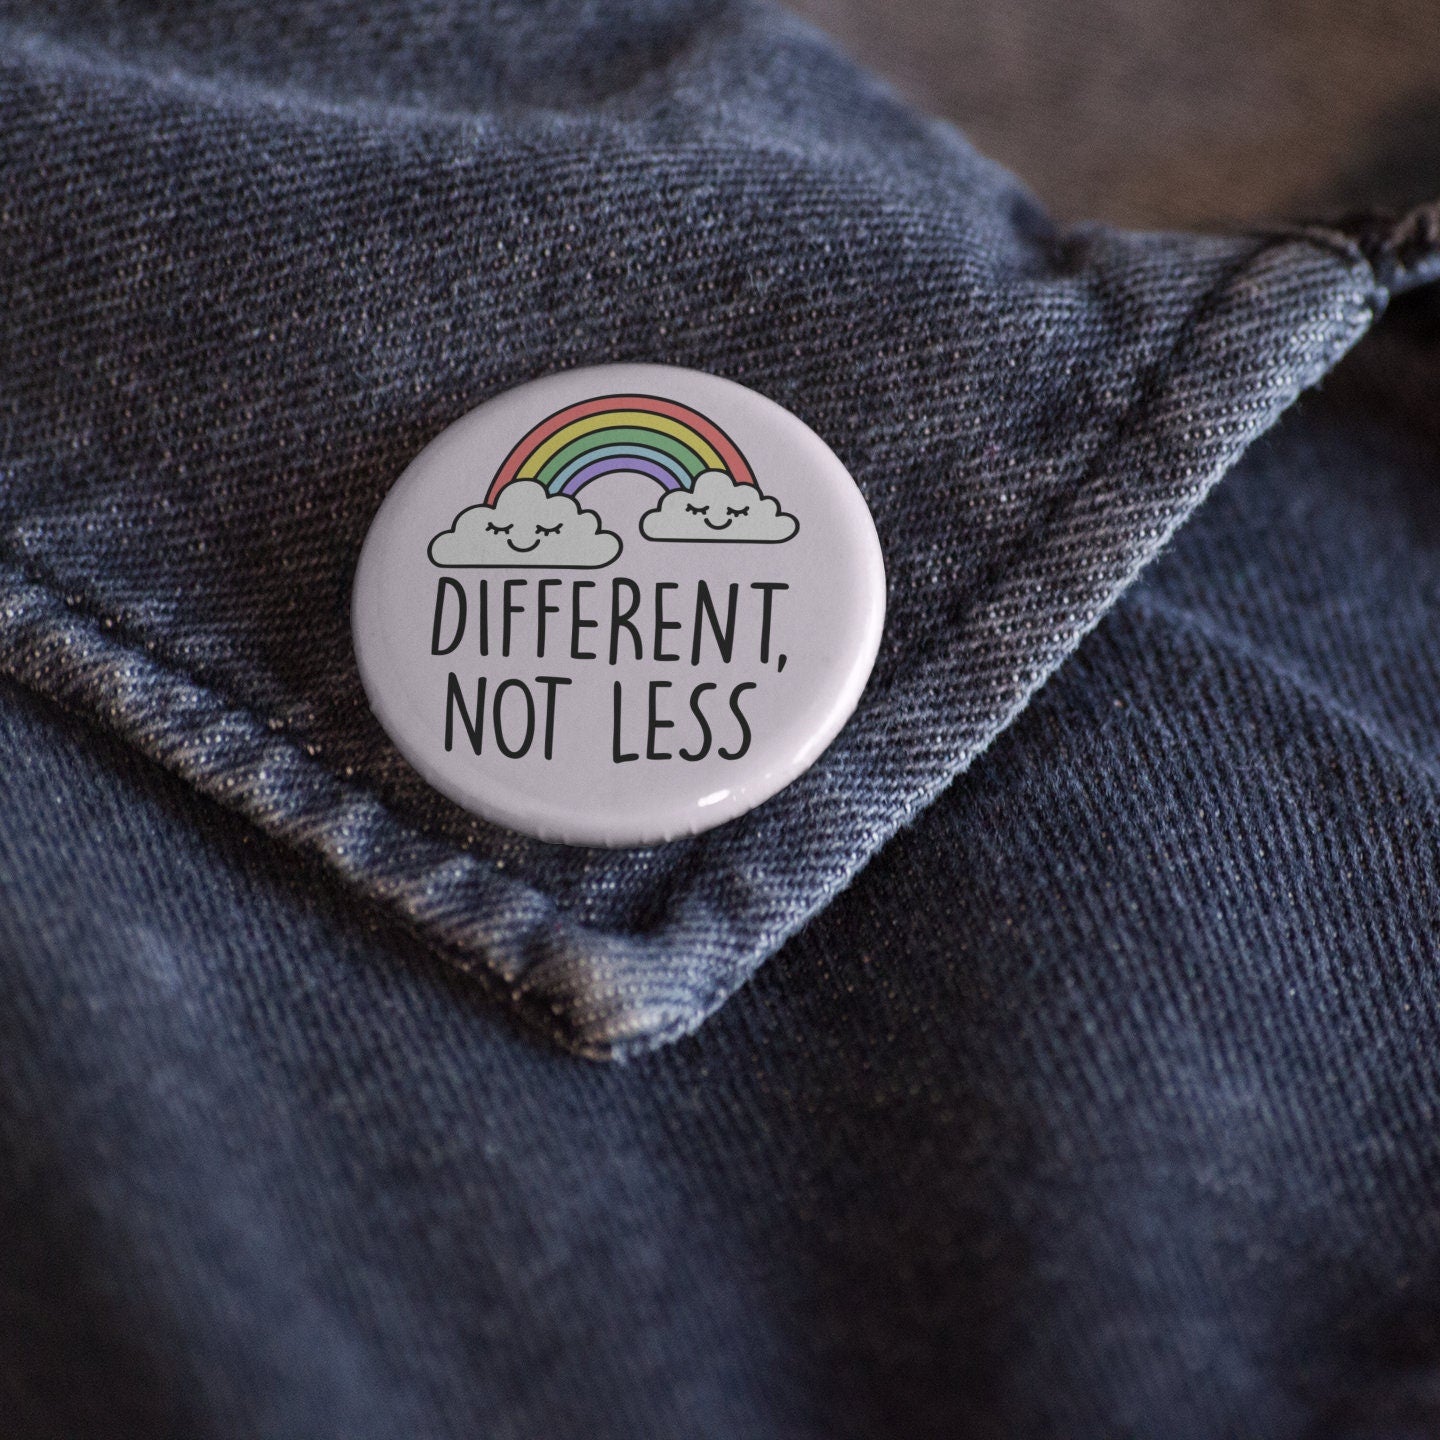 Different Not Less Badge Pin | Autism Awareness - Neurodiversity - Acceptance Badges